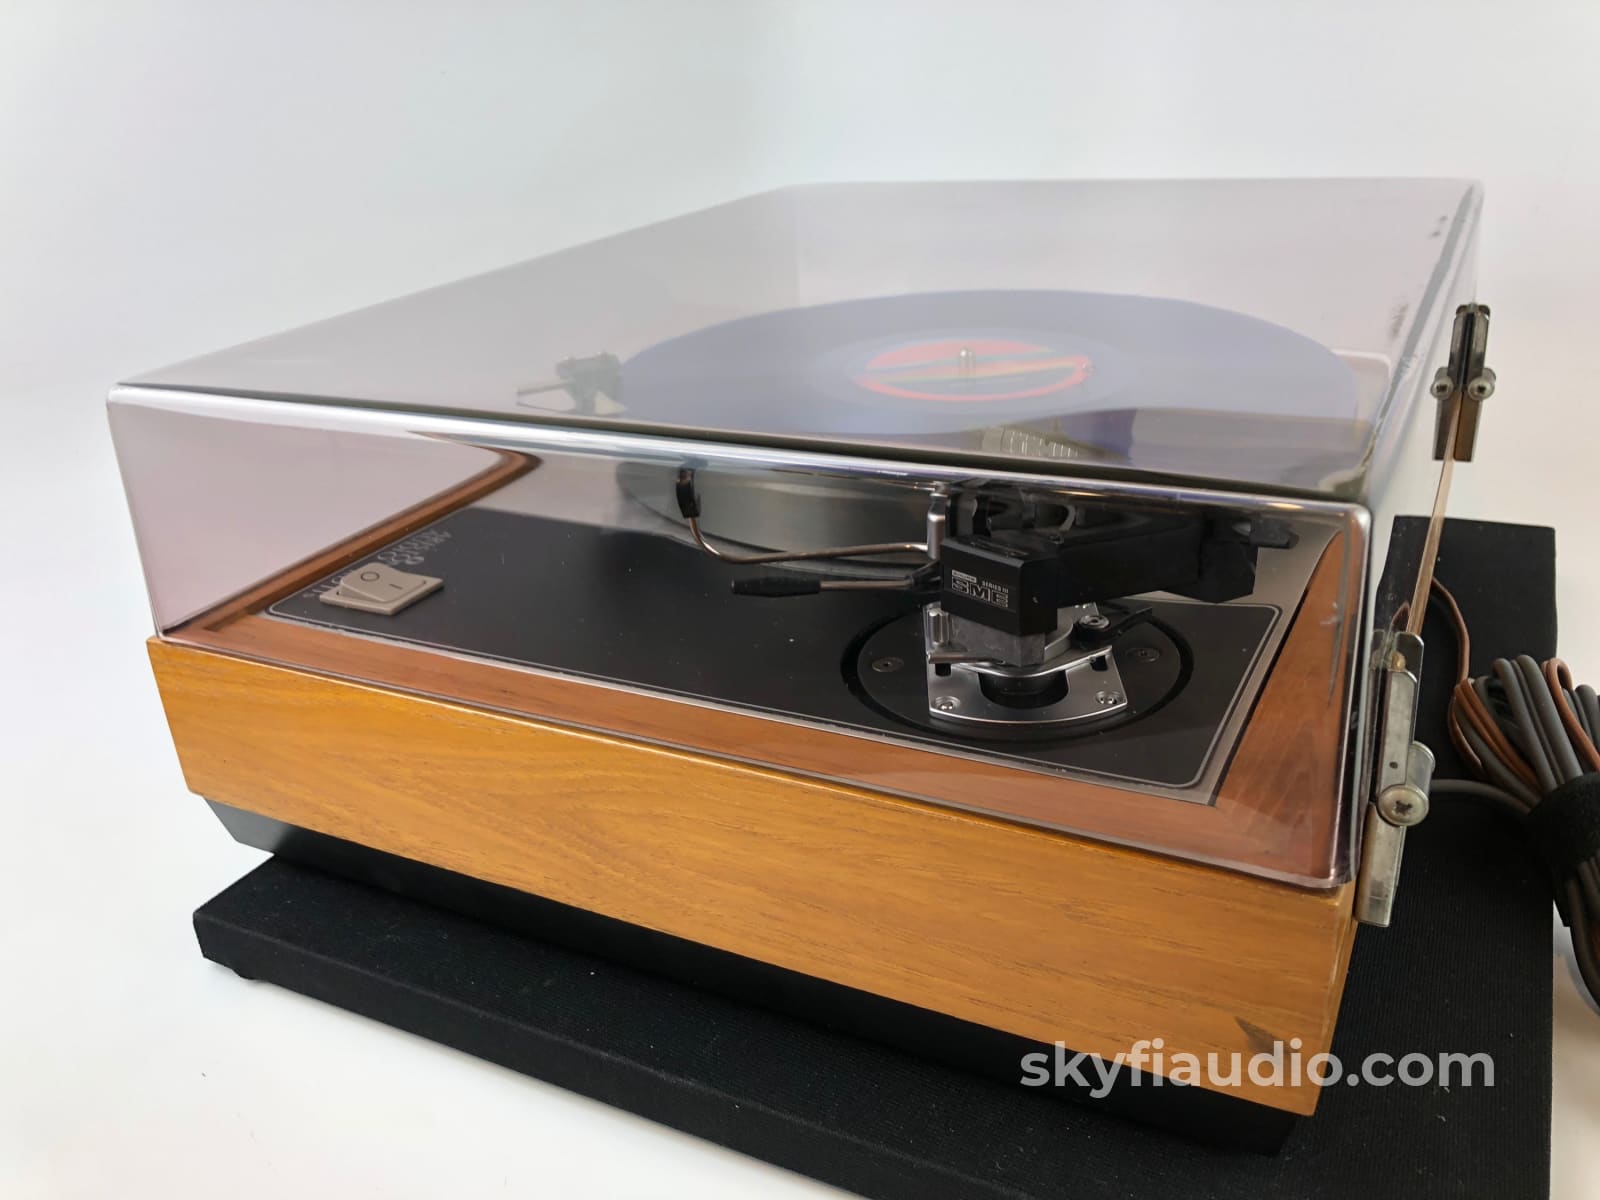 Ariston Audio Rd-11S Vintage Turntable - With New Ortofon 2M Red Cartridge And Sme Tonearm